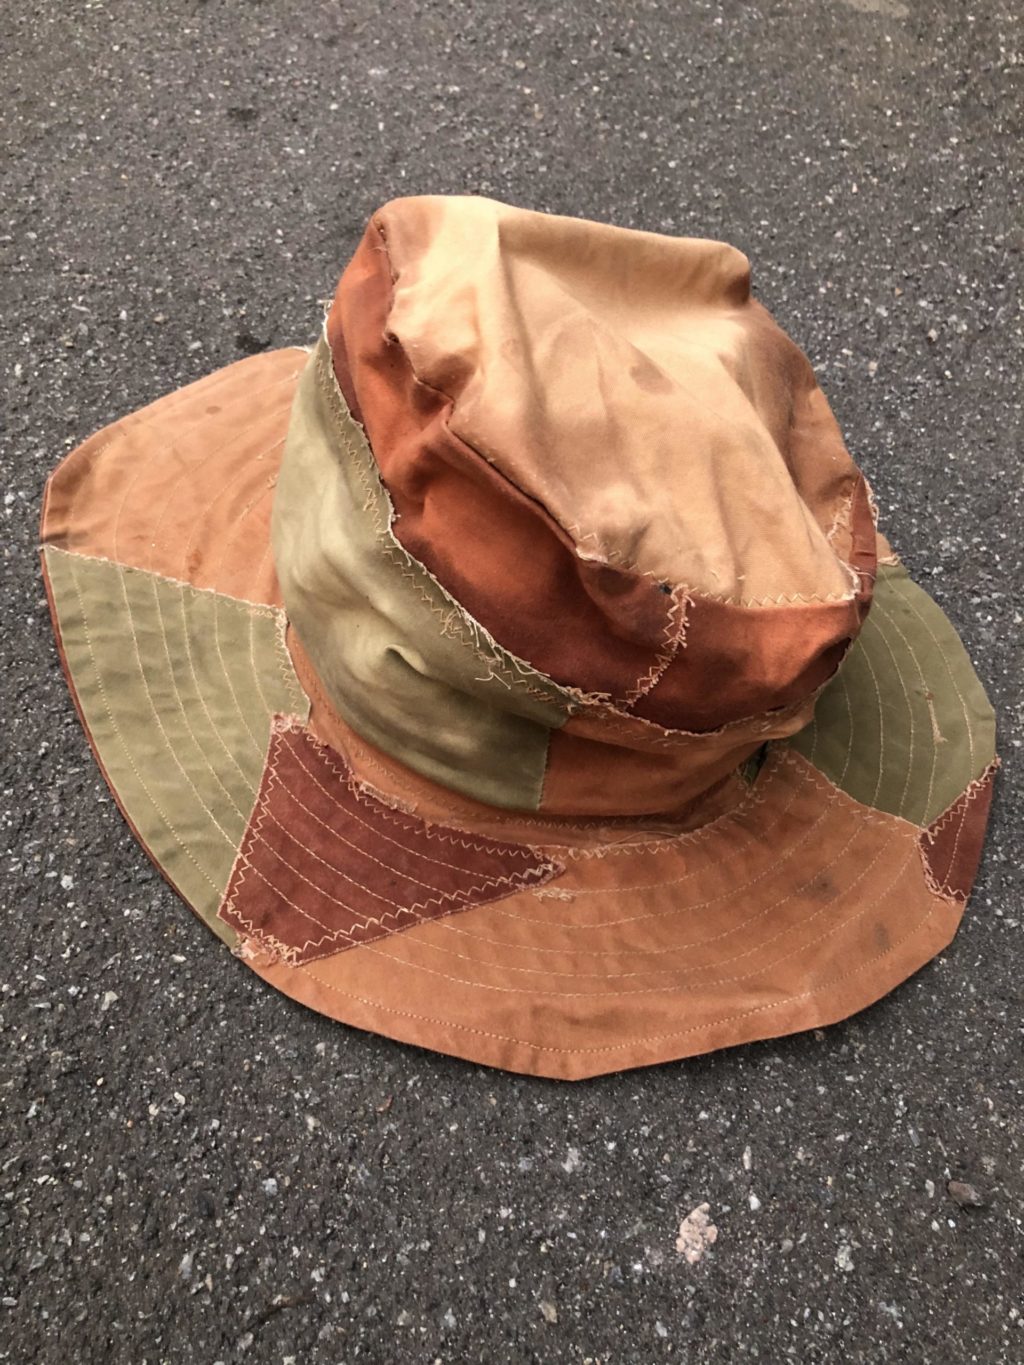 Mad Hatter's Hat